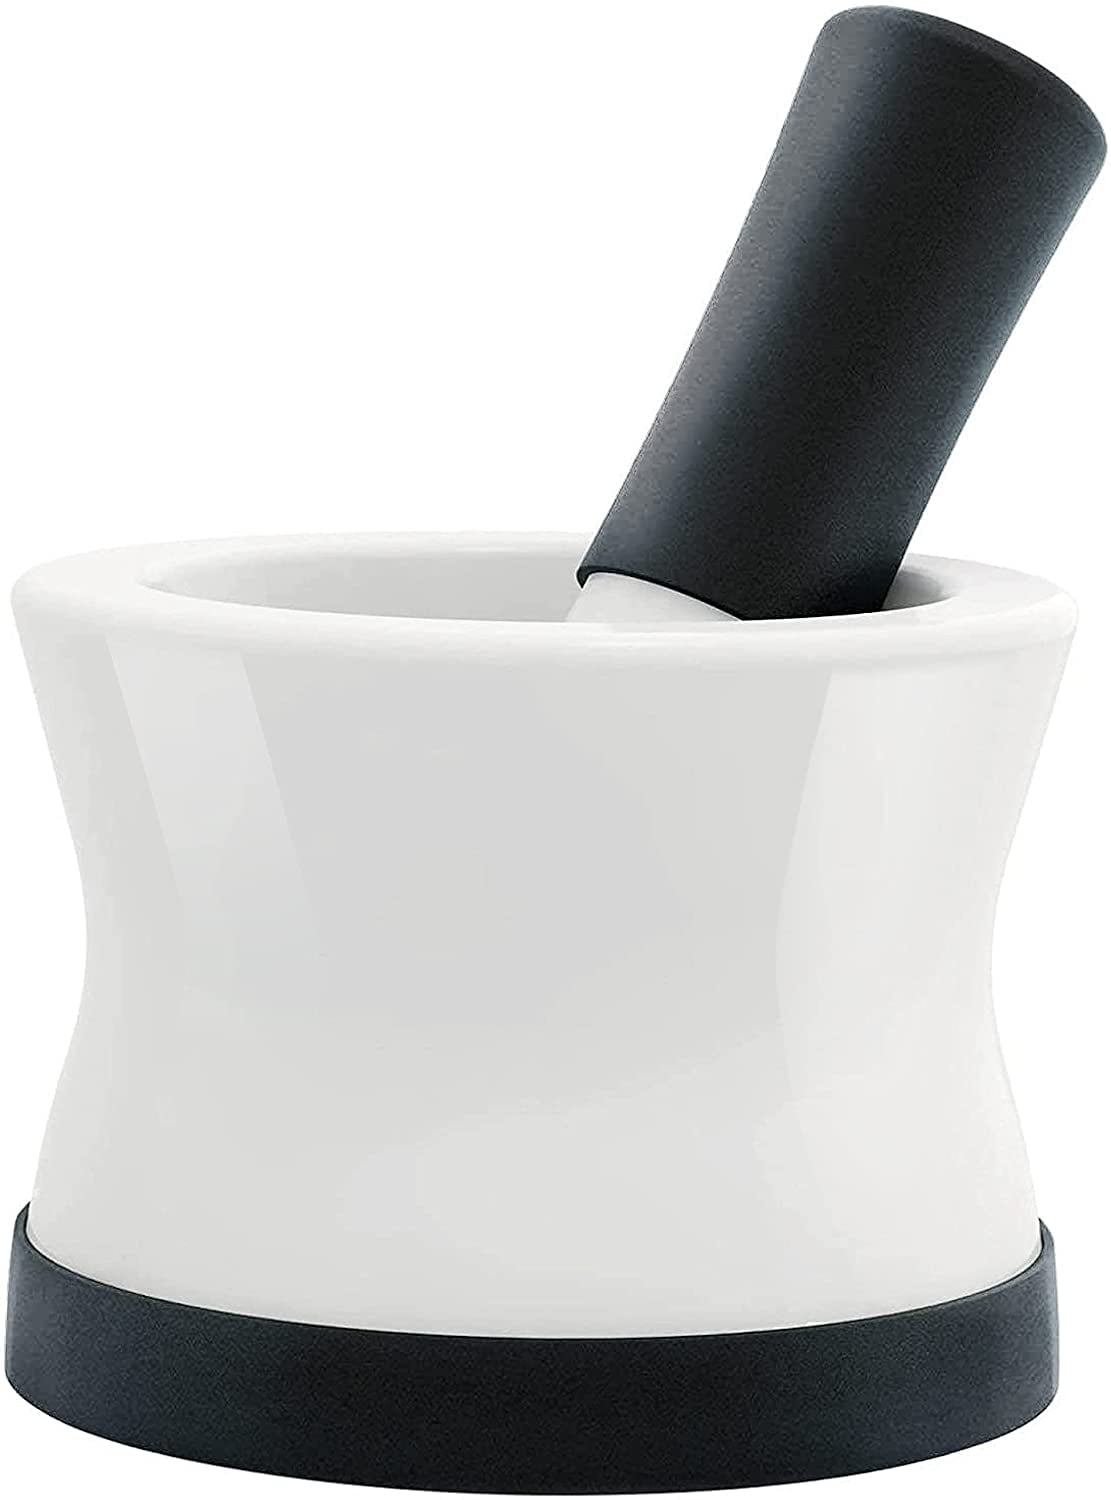 WINJEE Porcelain Mortar and Pestle Spice Herb Grinder Mixing Grinding Bowl Crusher Set Mortar Bowl White